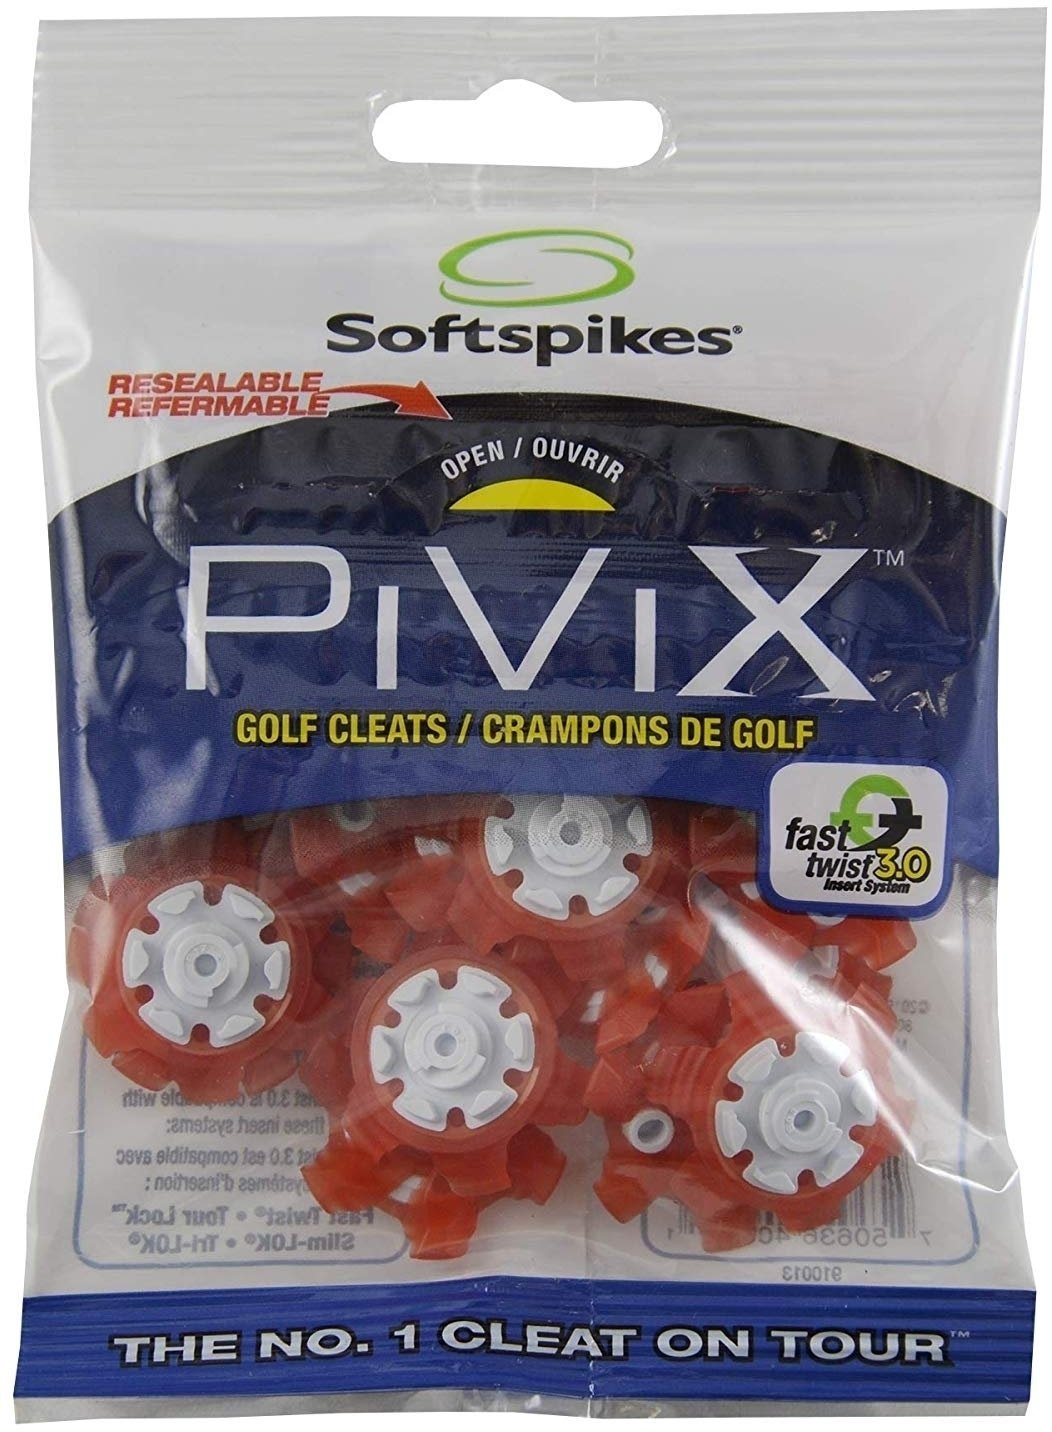 Akcesoria buty golfowe Softspikes Pivix Fast Twist 3.0 Red